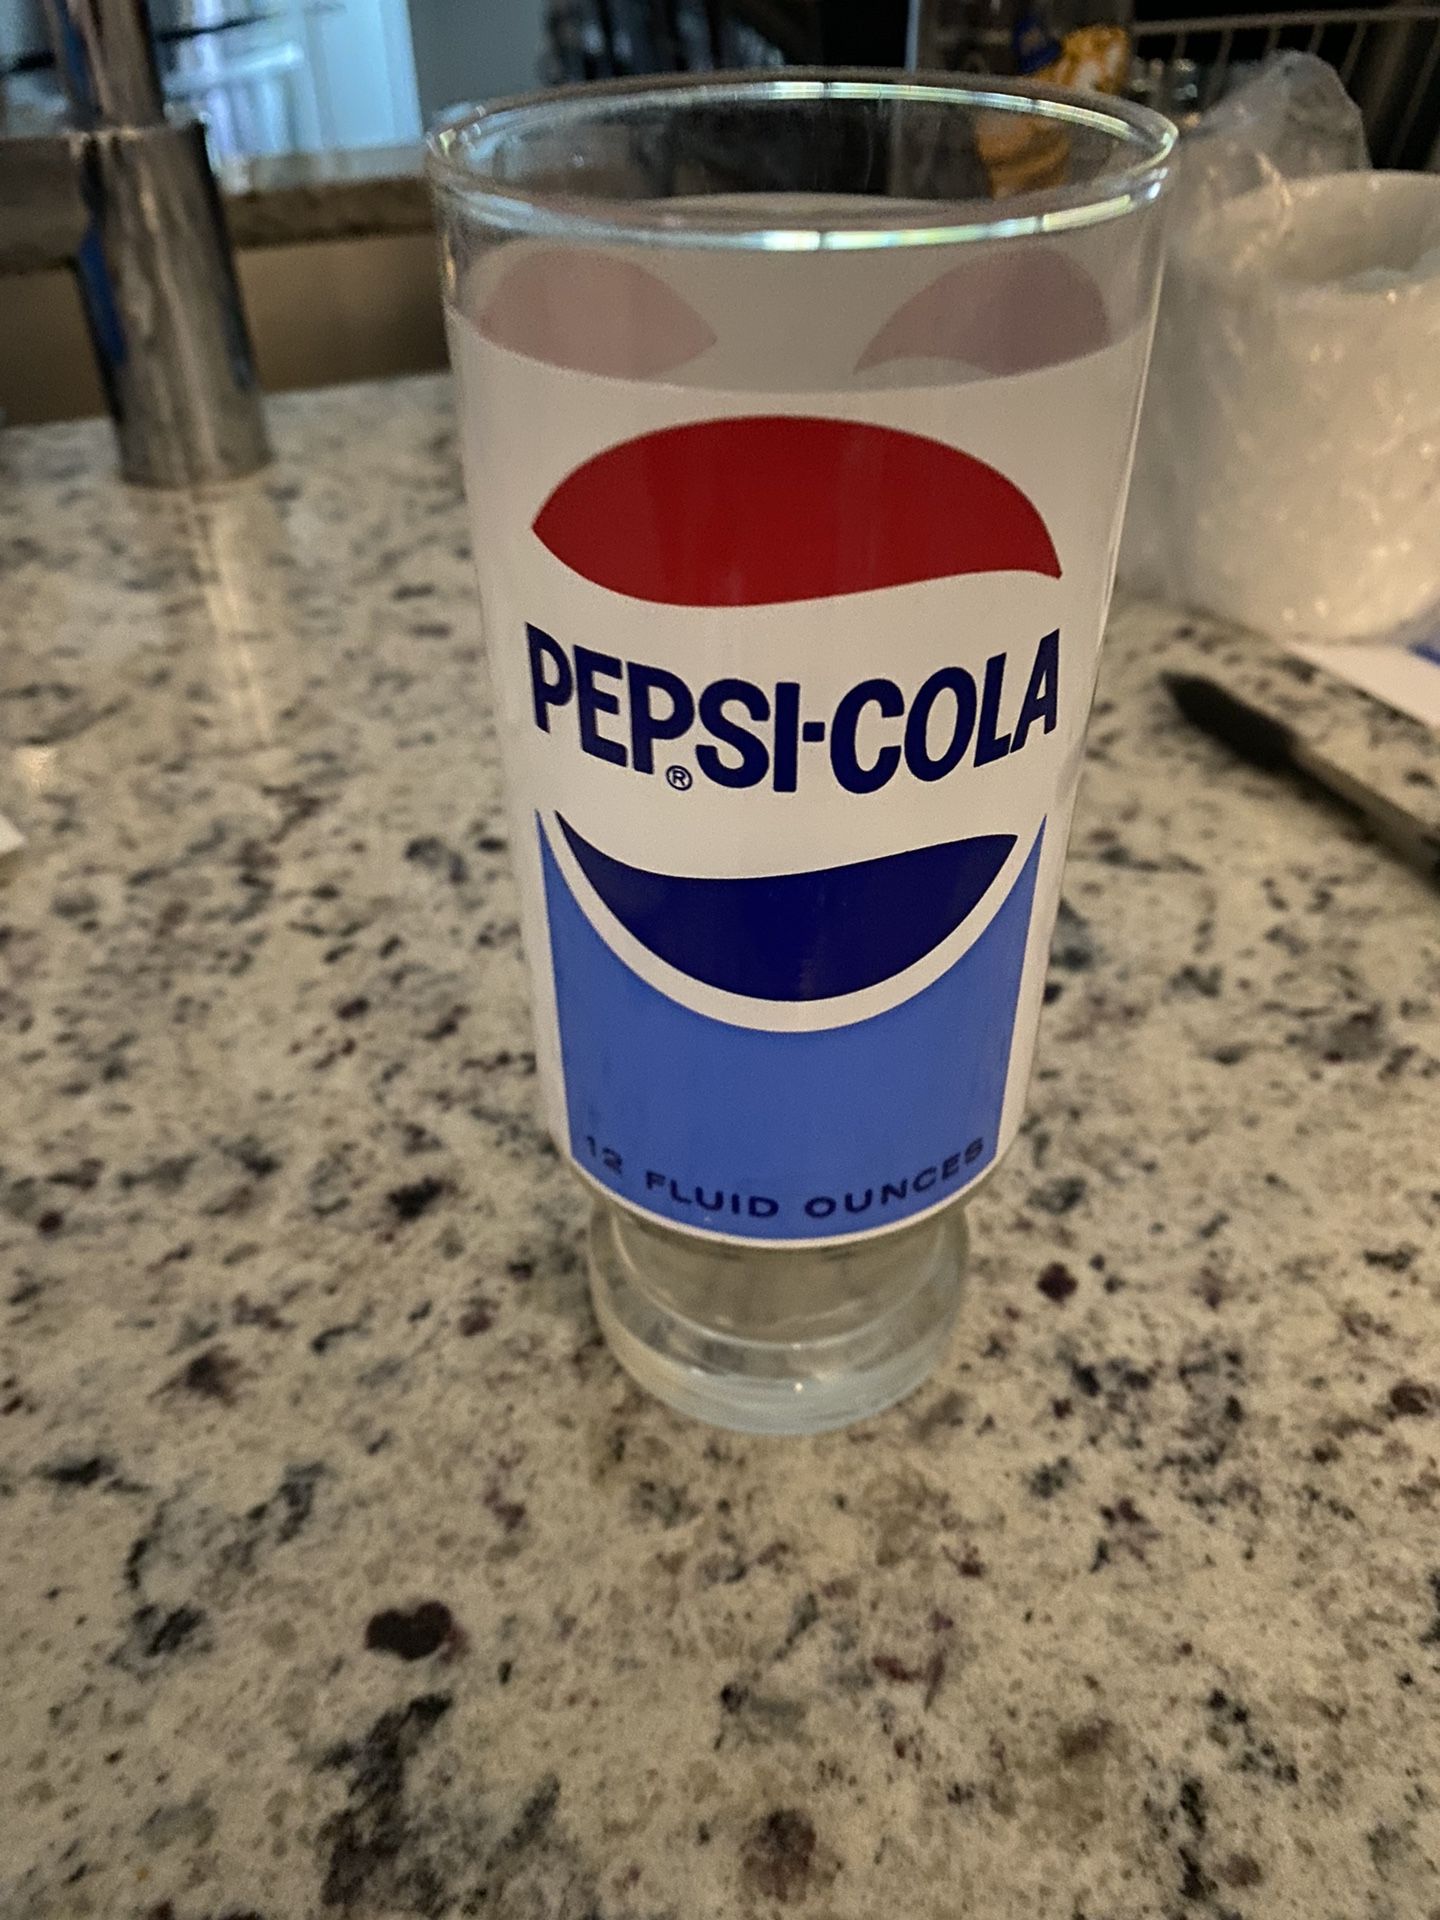 Vintage Pepsi Glass